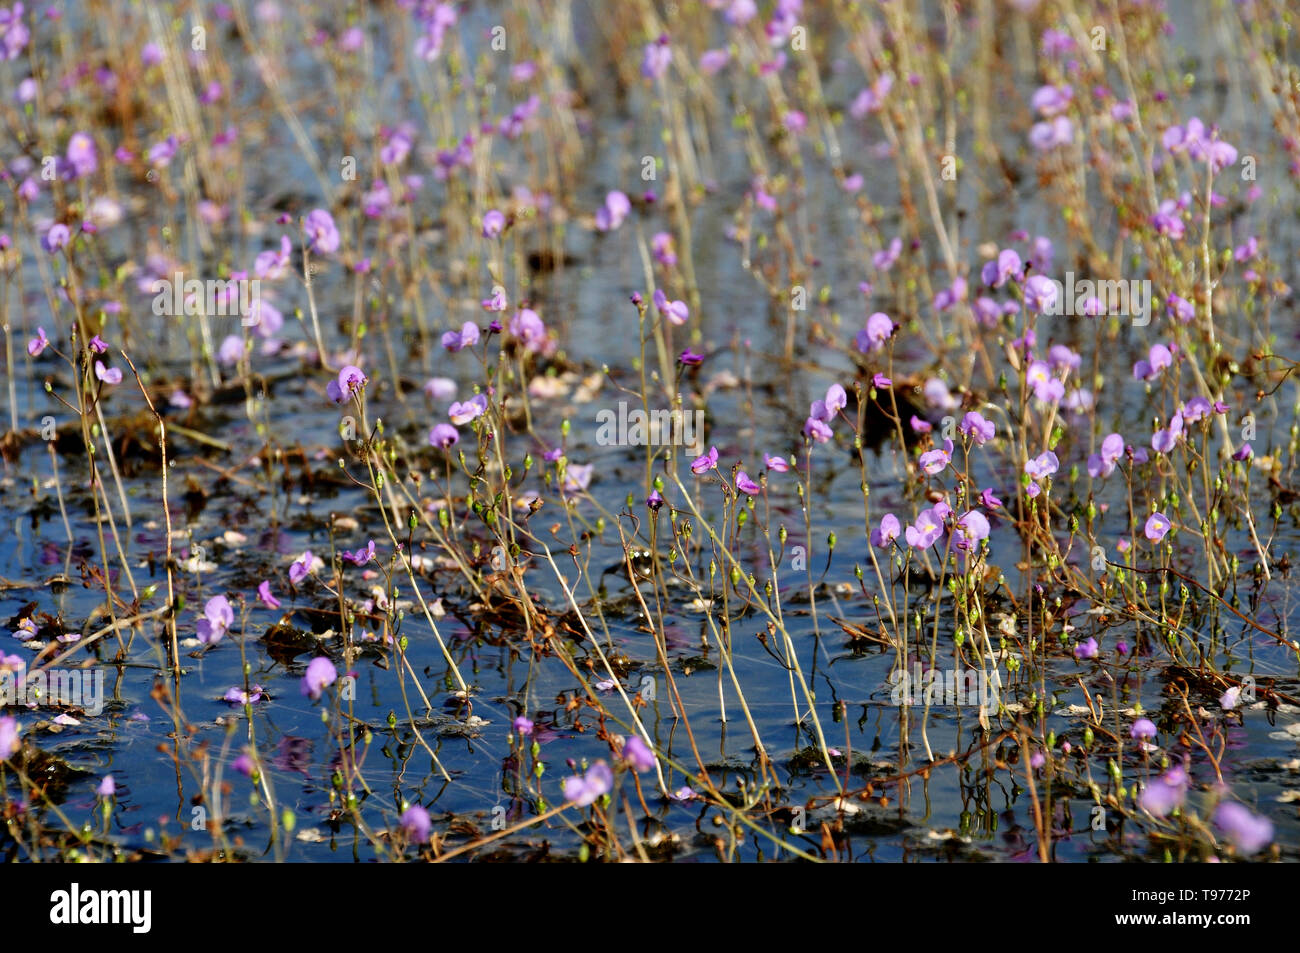 golden bladderwort or Utricularia aurea at Lake Thale Noi Waterfowl Reserve, Khuan Khanun, Thailand Stock Photo